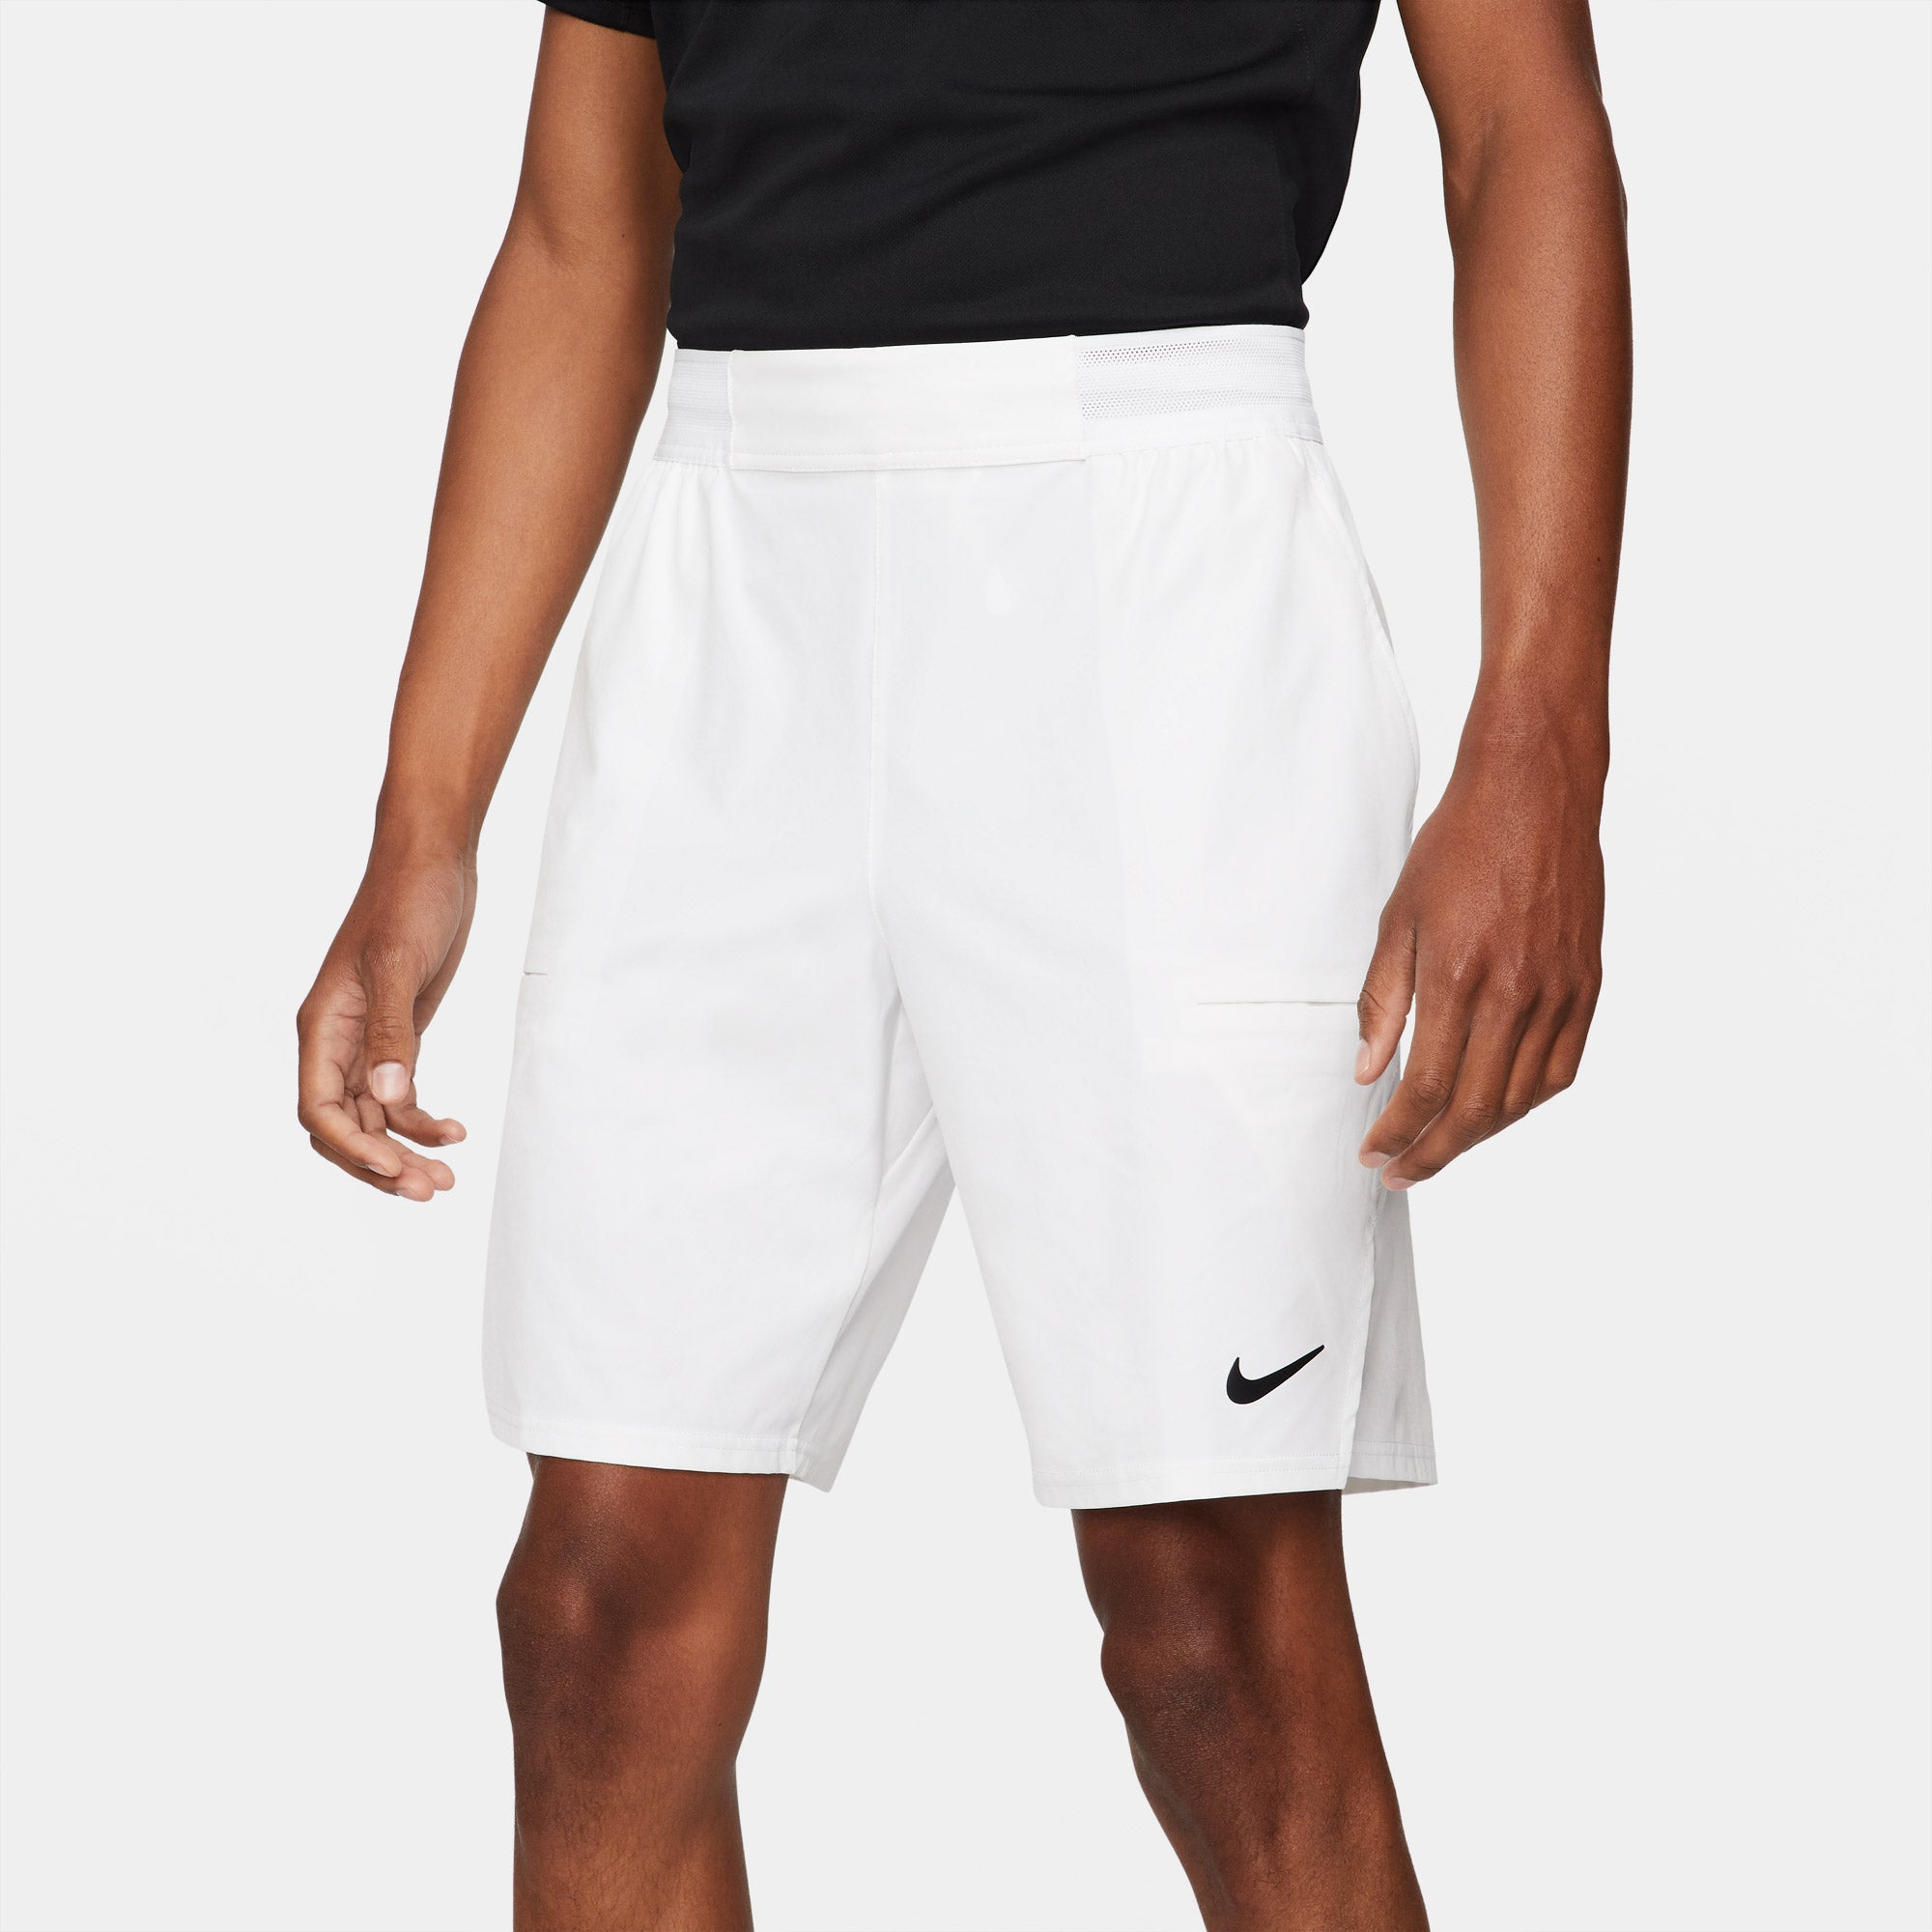 Nike Flex Advantage Men's 9-Inch Tennis Shorts White (4)